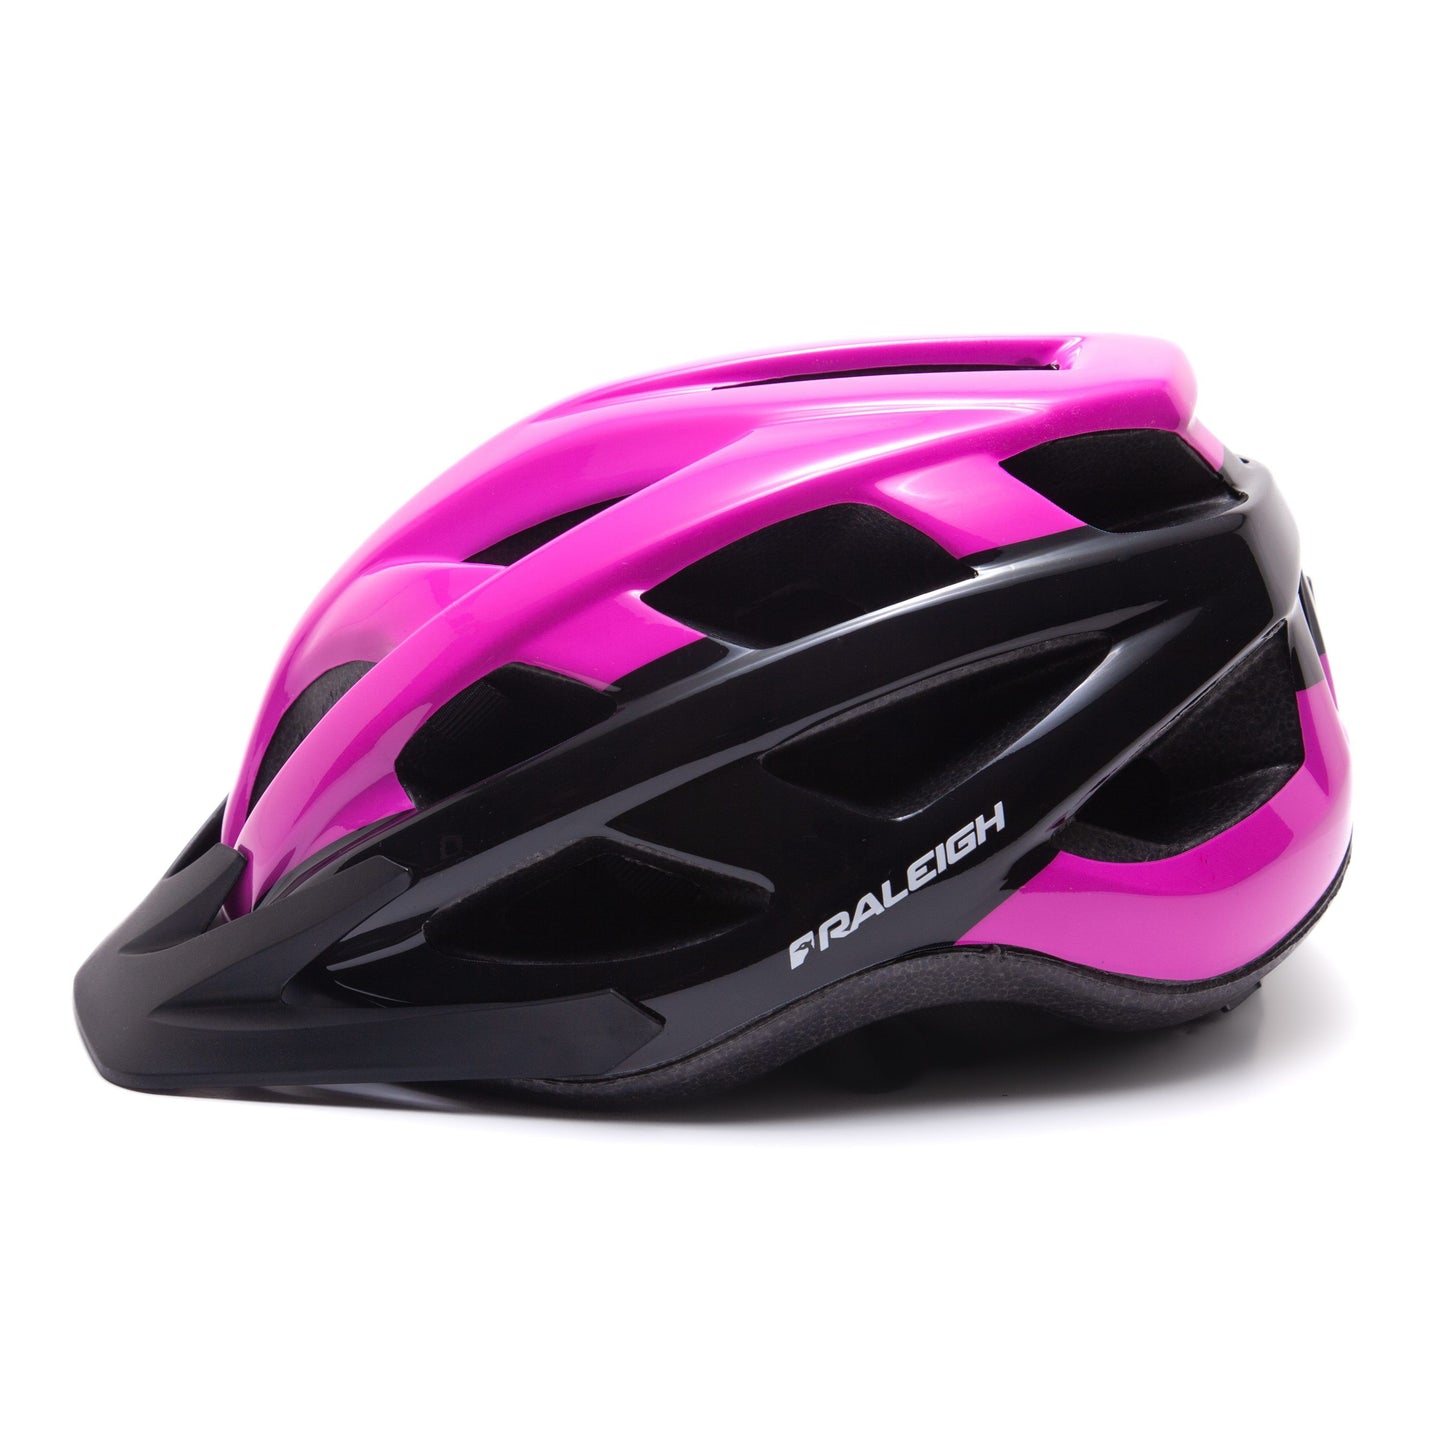 Raleigh HELMET QUEST PNK/BLK 54-58 GO Cycling Helmet Pink/Black 54-58cm Alternate 1